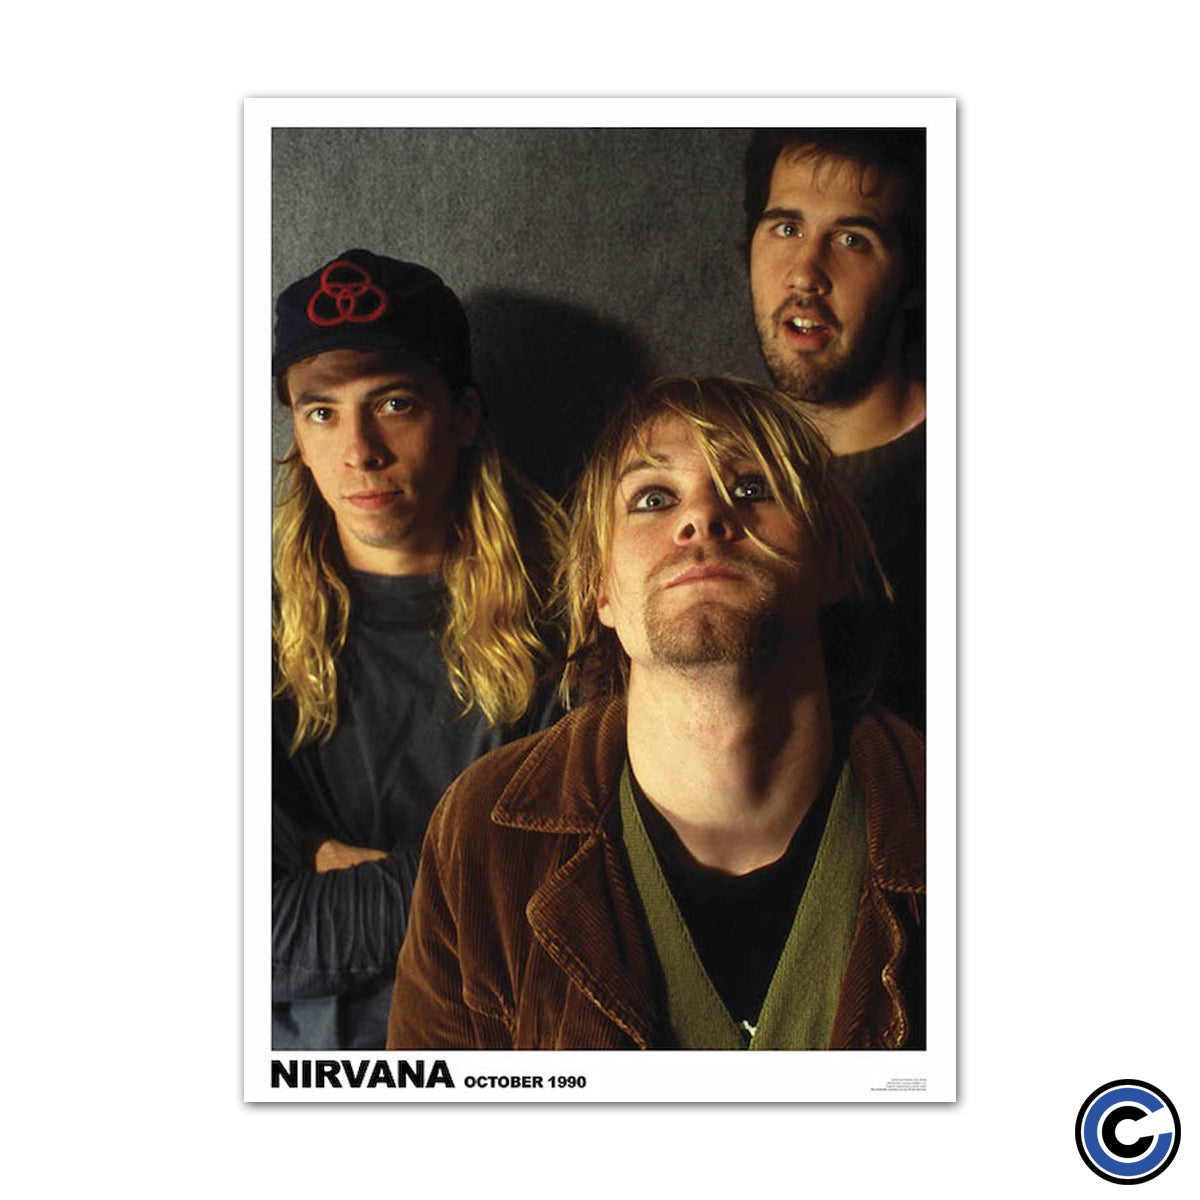 Nirvana "October 1990" Poster